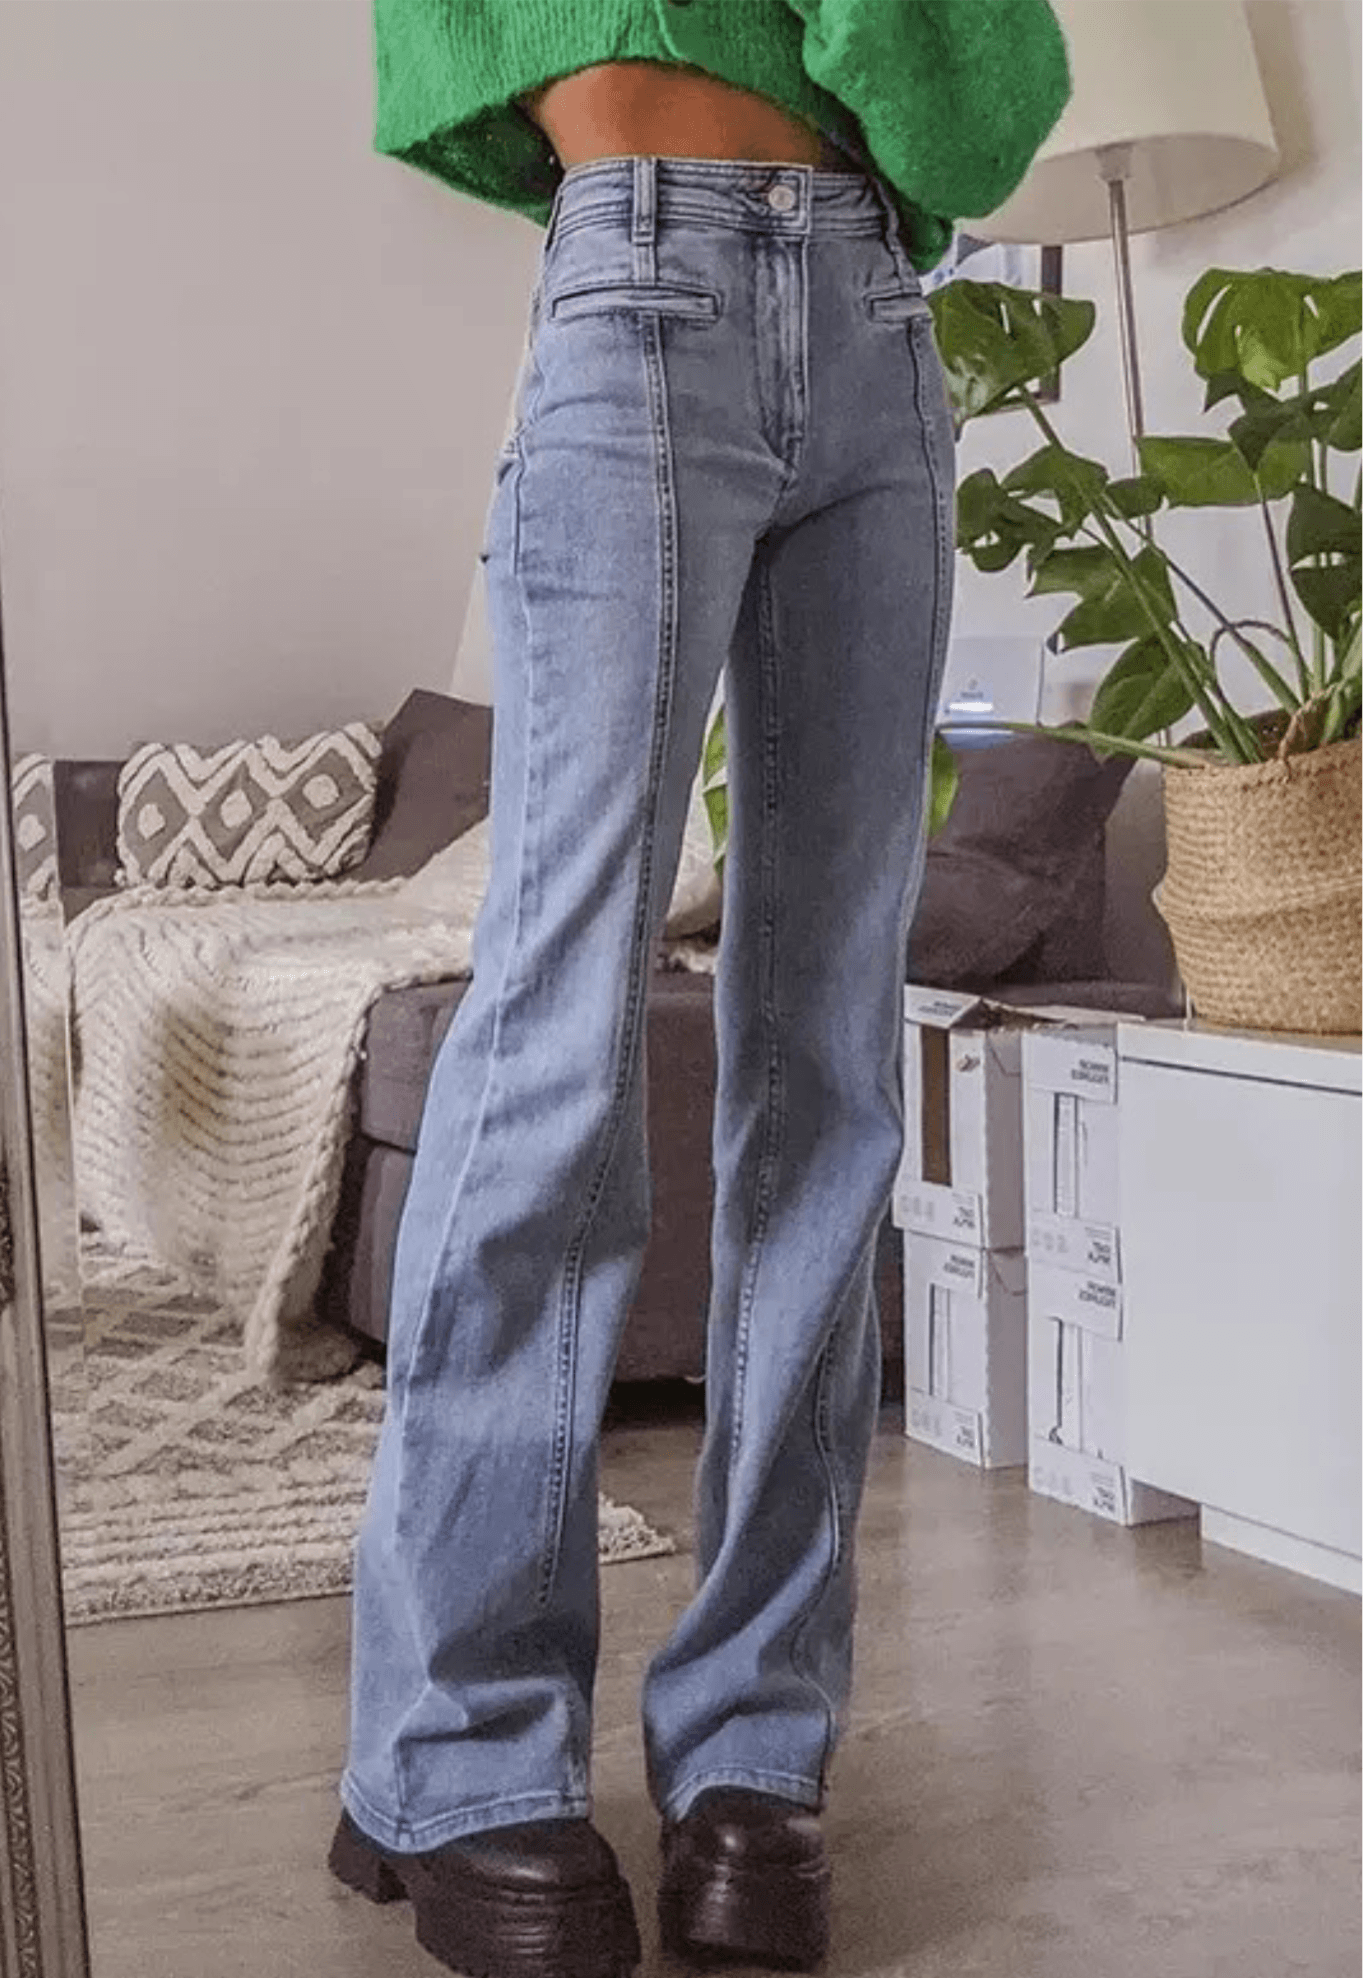 Pocket Star Denim Jeans - shopuntitled.co